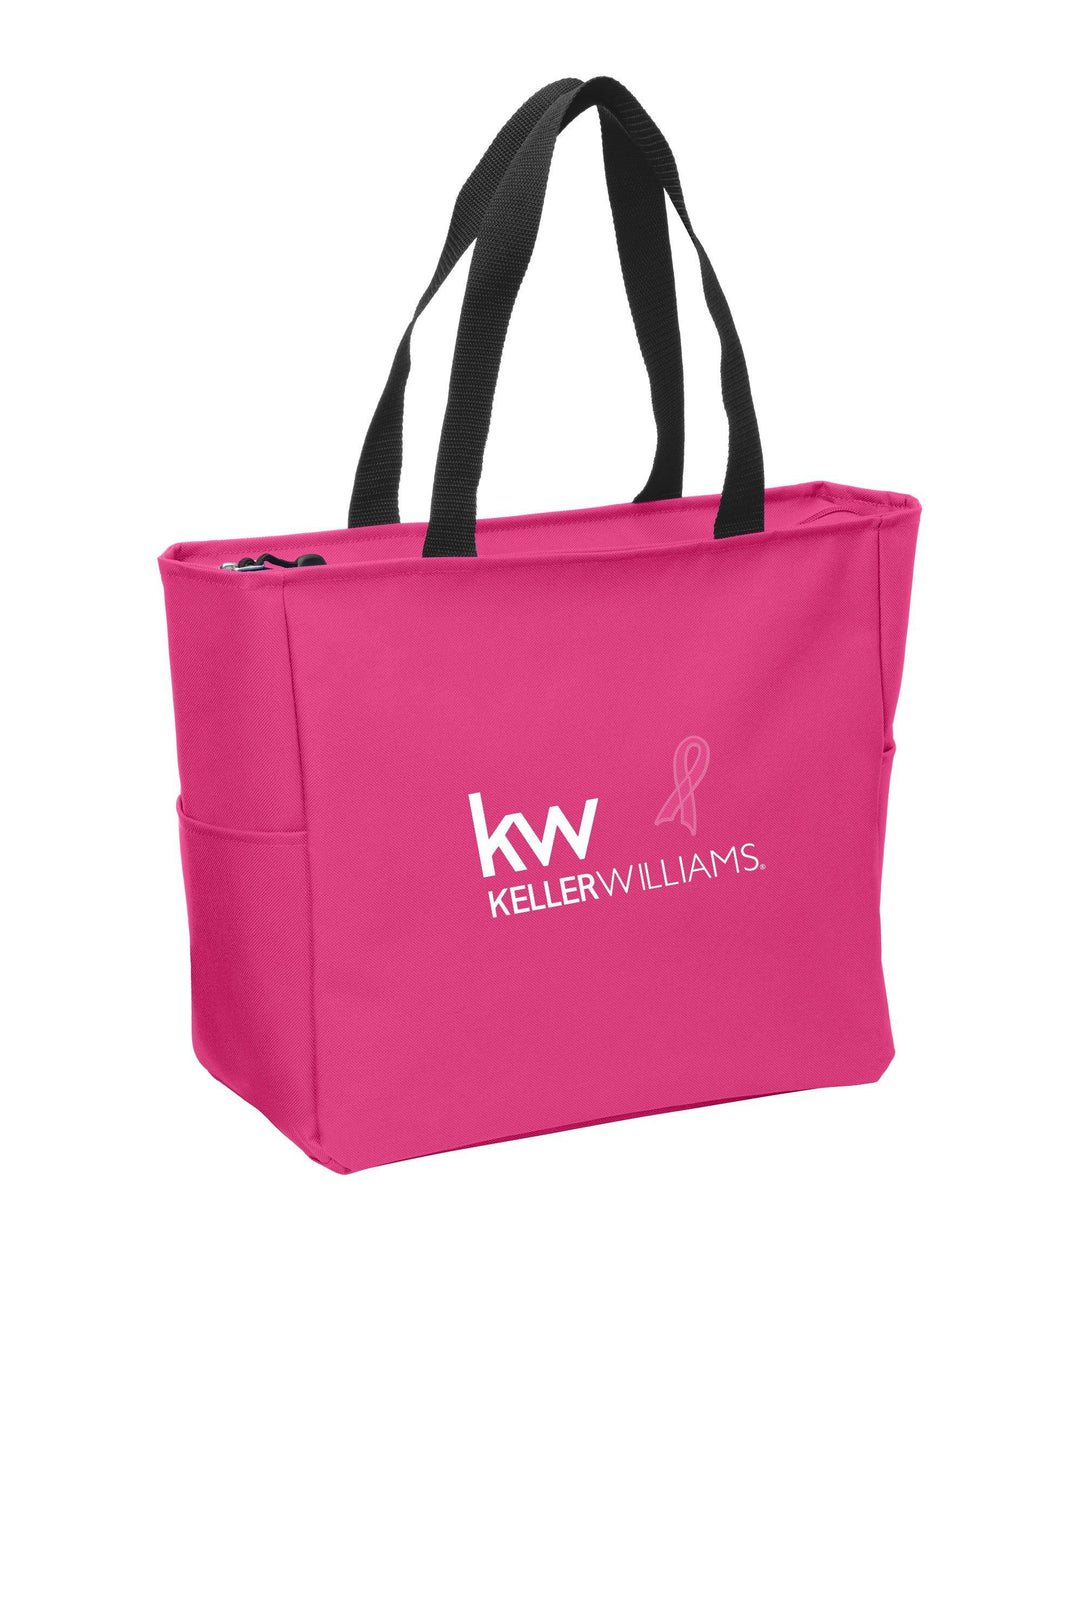 Keller Williams KW-TPBG410 Breast CancerAwareness Essential Zip Tote 